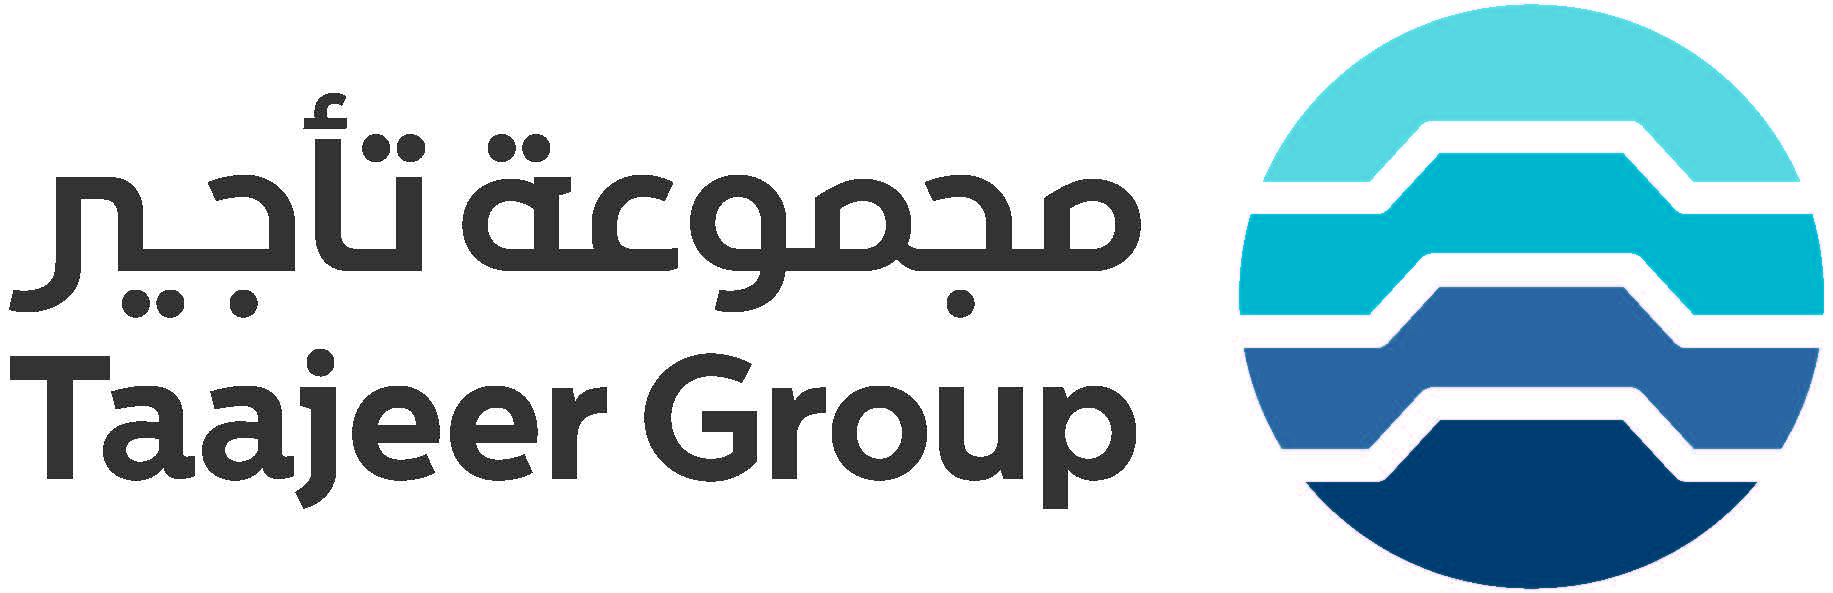 taajer group_cmyk_logo.jpg